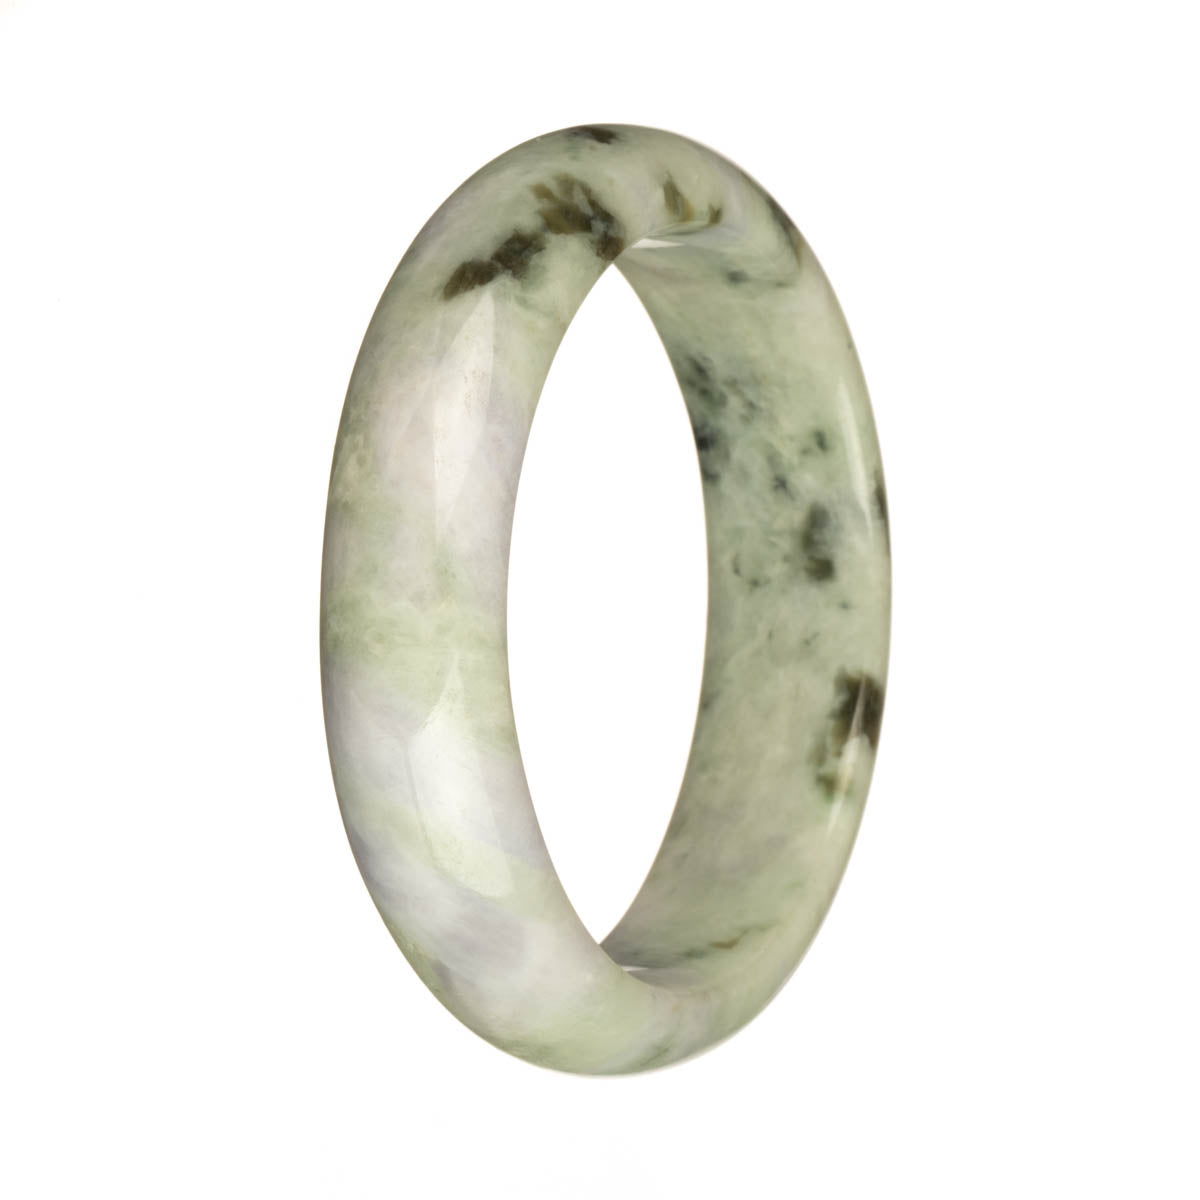 57.9mm Pale Green with Lavender and Olive Green Patterns Jade Bangle Bracelet